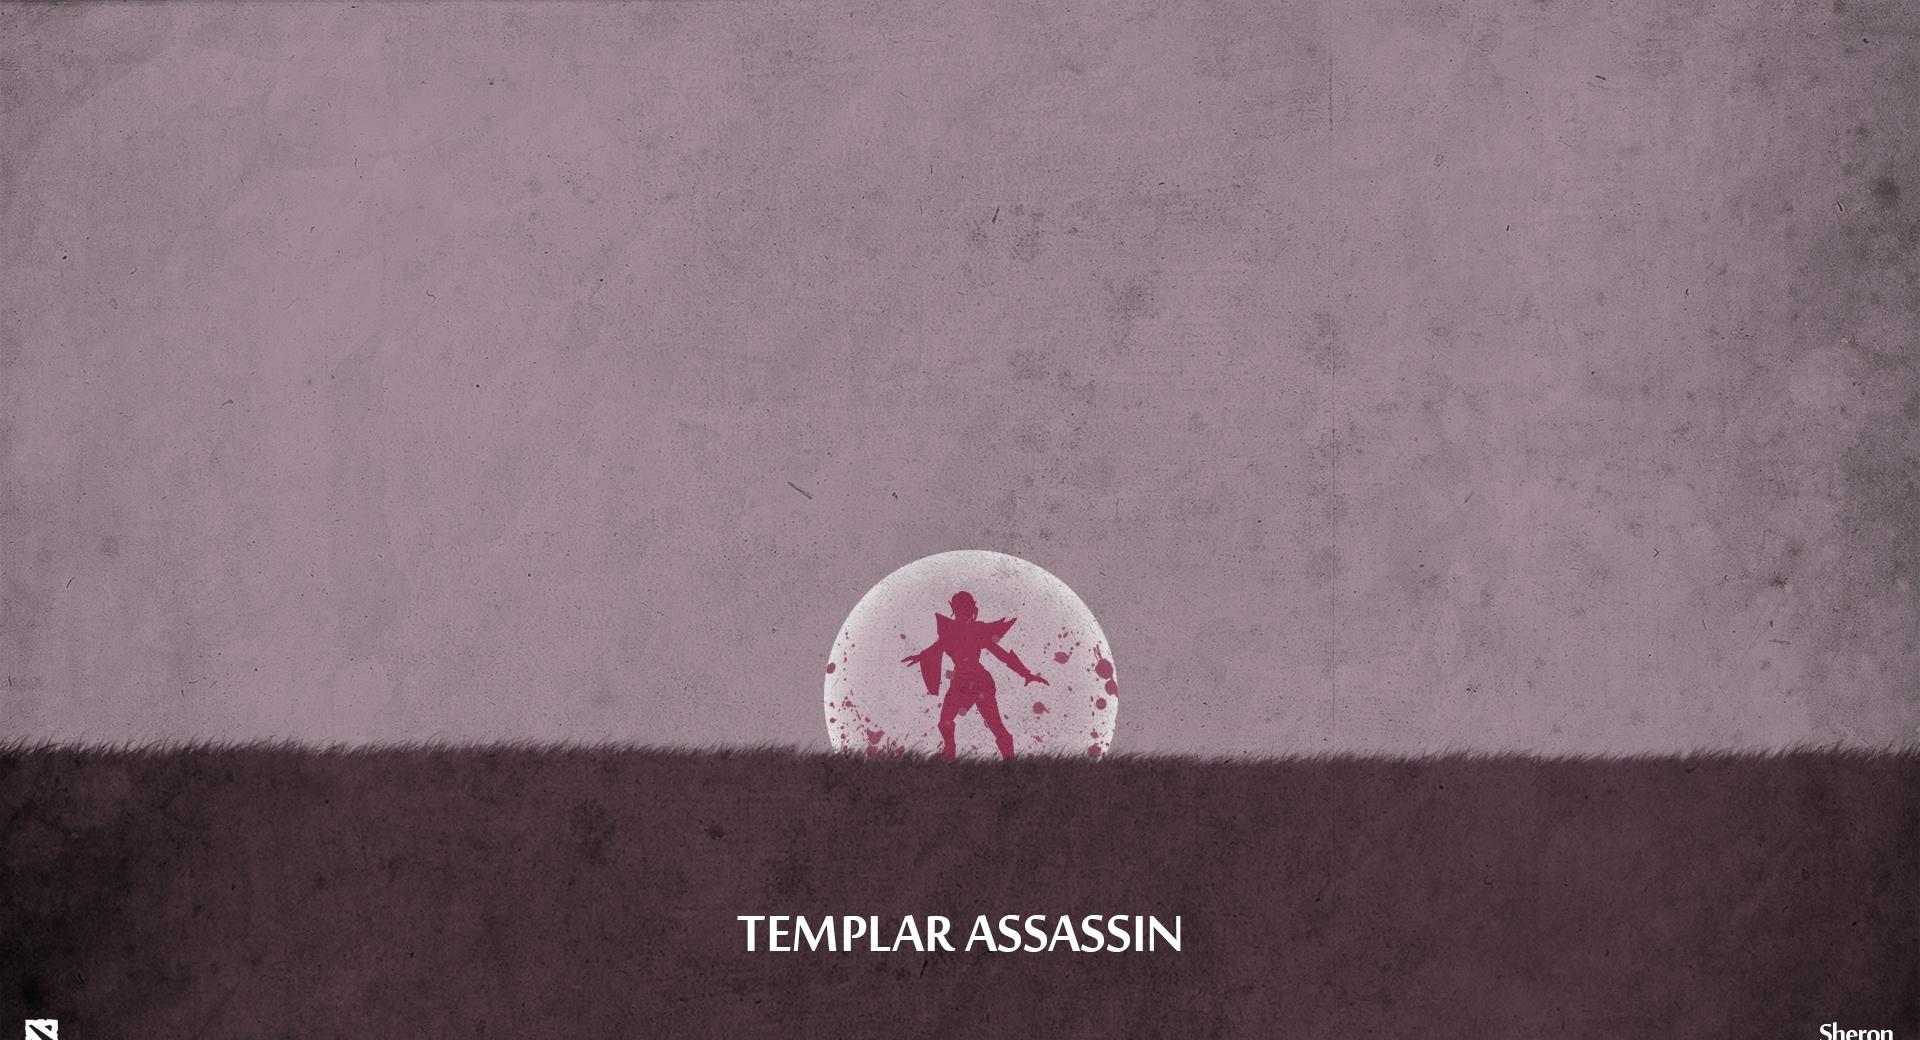 Templar Assassin - DotA 2 at 1600 x 1200 size wallpapers HD quality